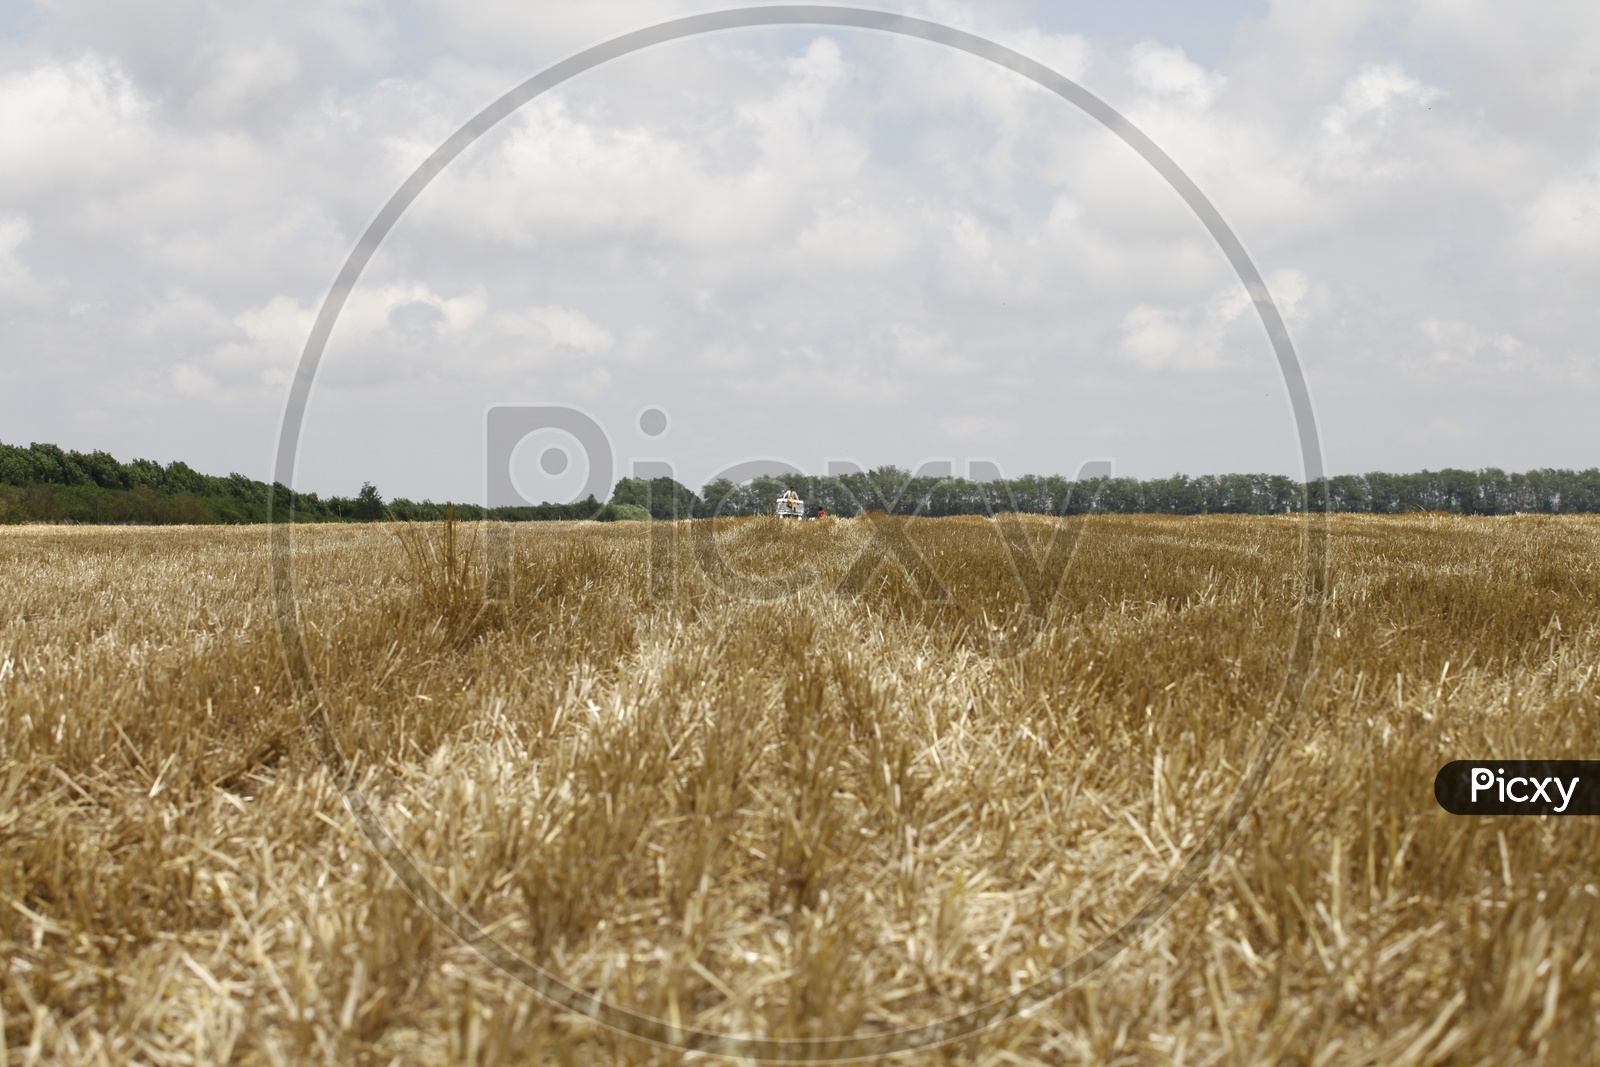 Dry grass in a field